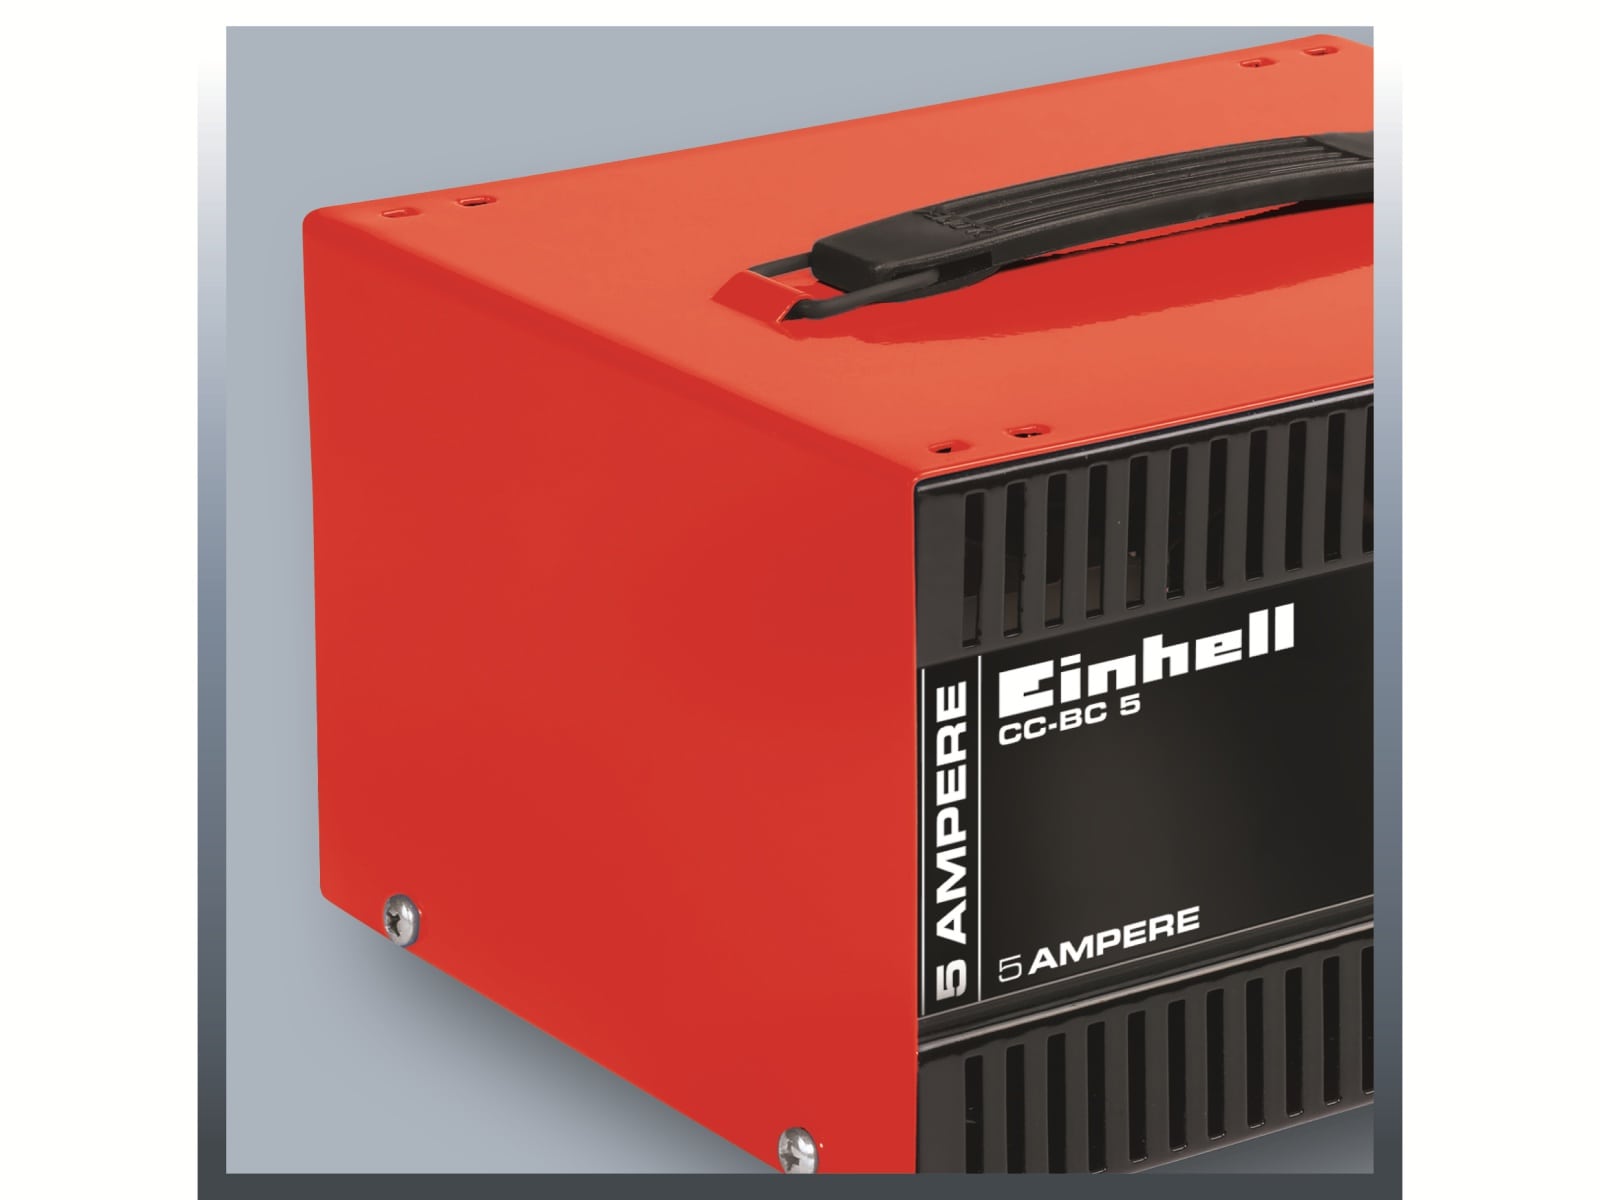 EINHELL Batterie-Ladegerät EINHELL CC-BC 5, 12 V, 5 A